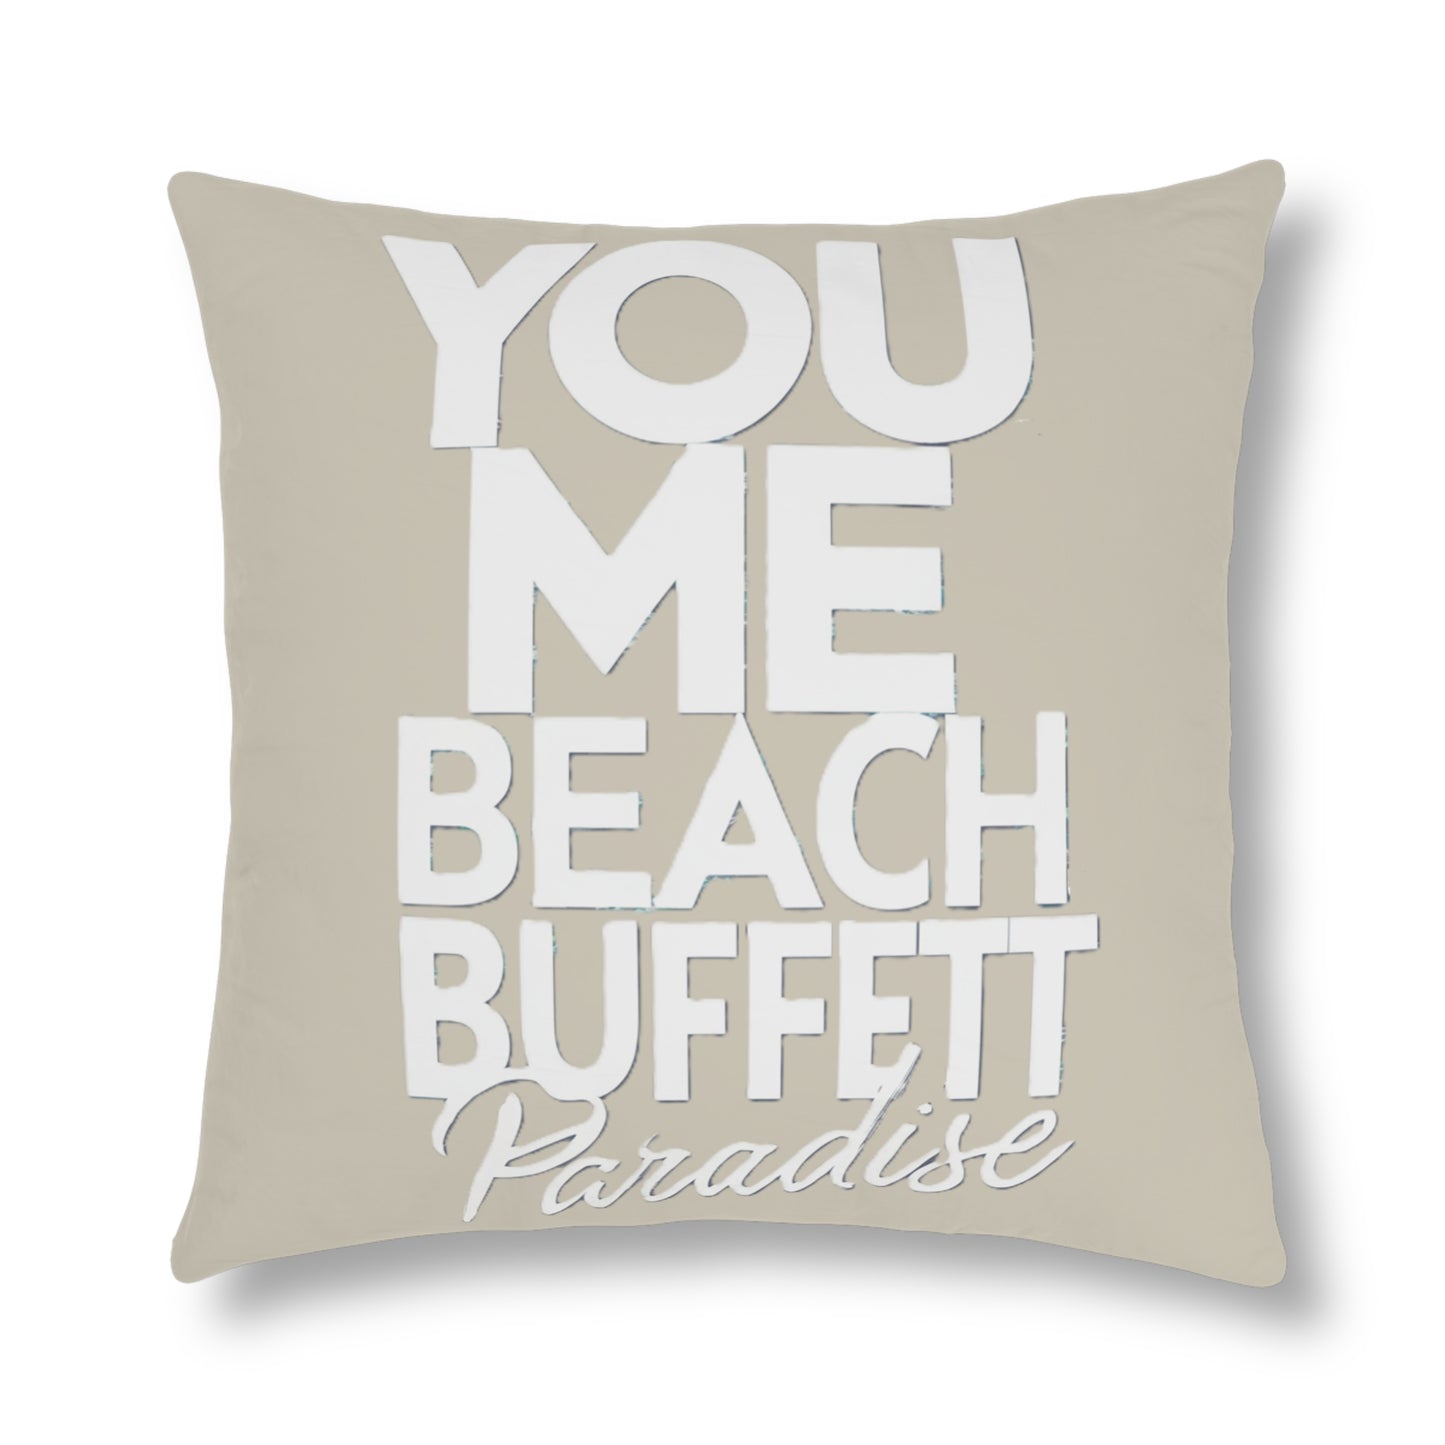 You, Me, Beach, Buffett, Paradise - Waterproof Pillow